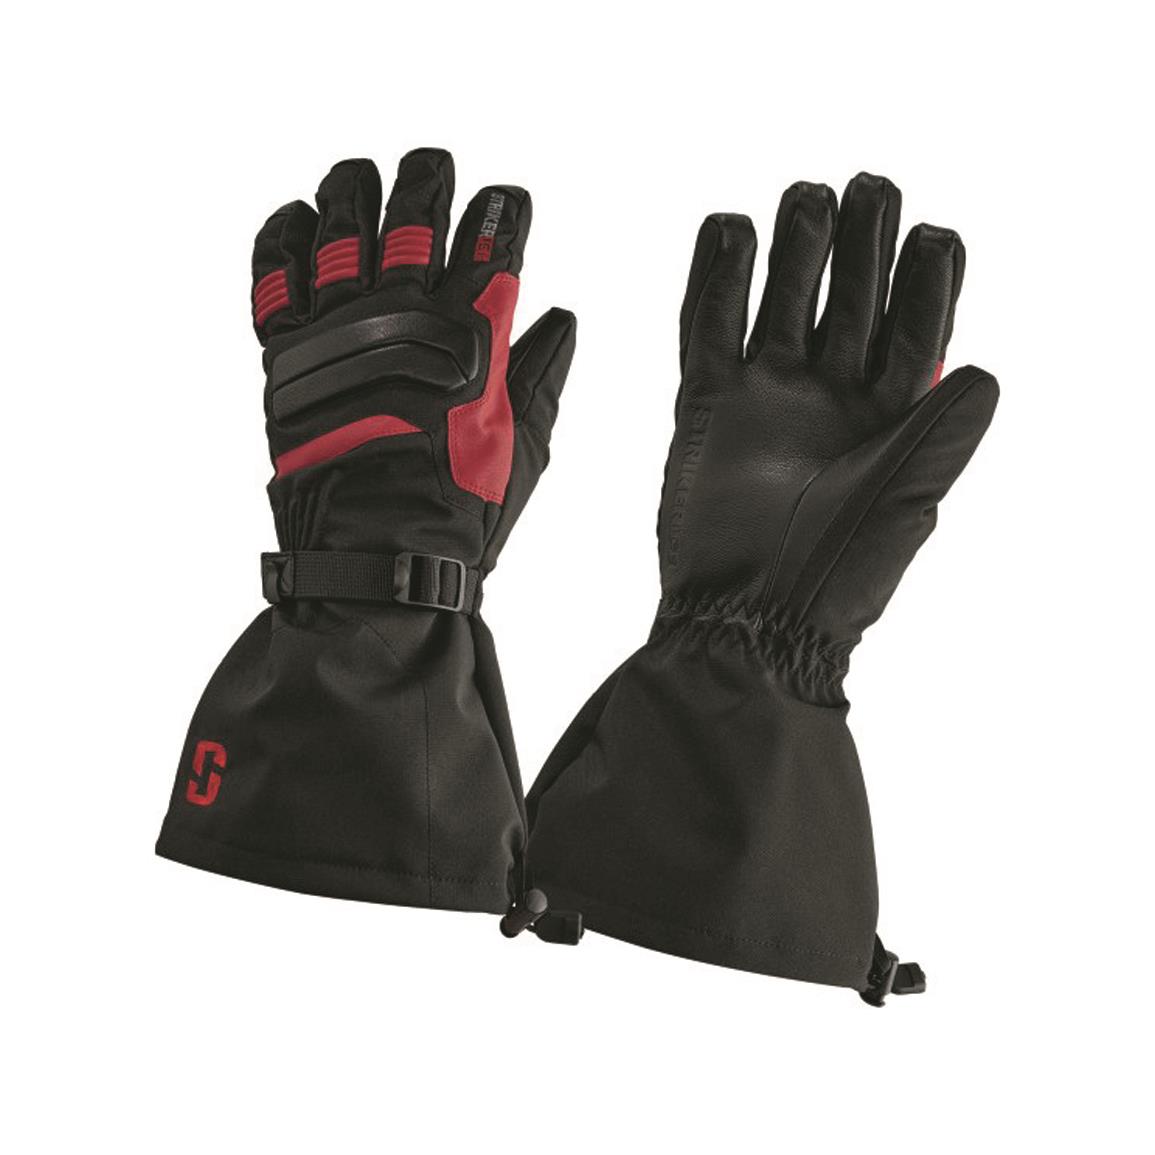 Striker Defender Ice Fishing Gloves, Black/Red